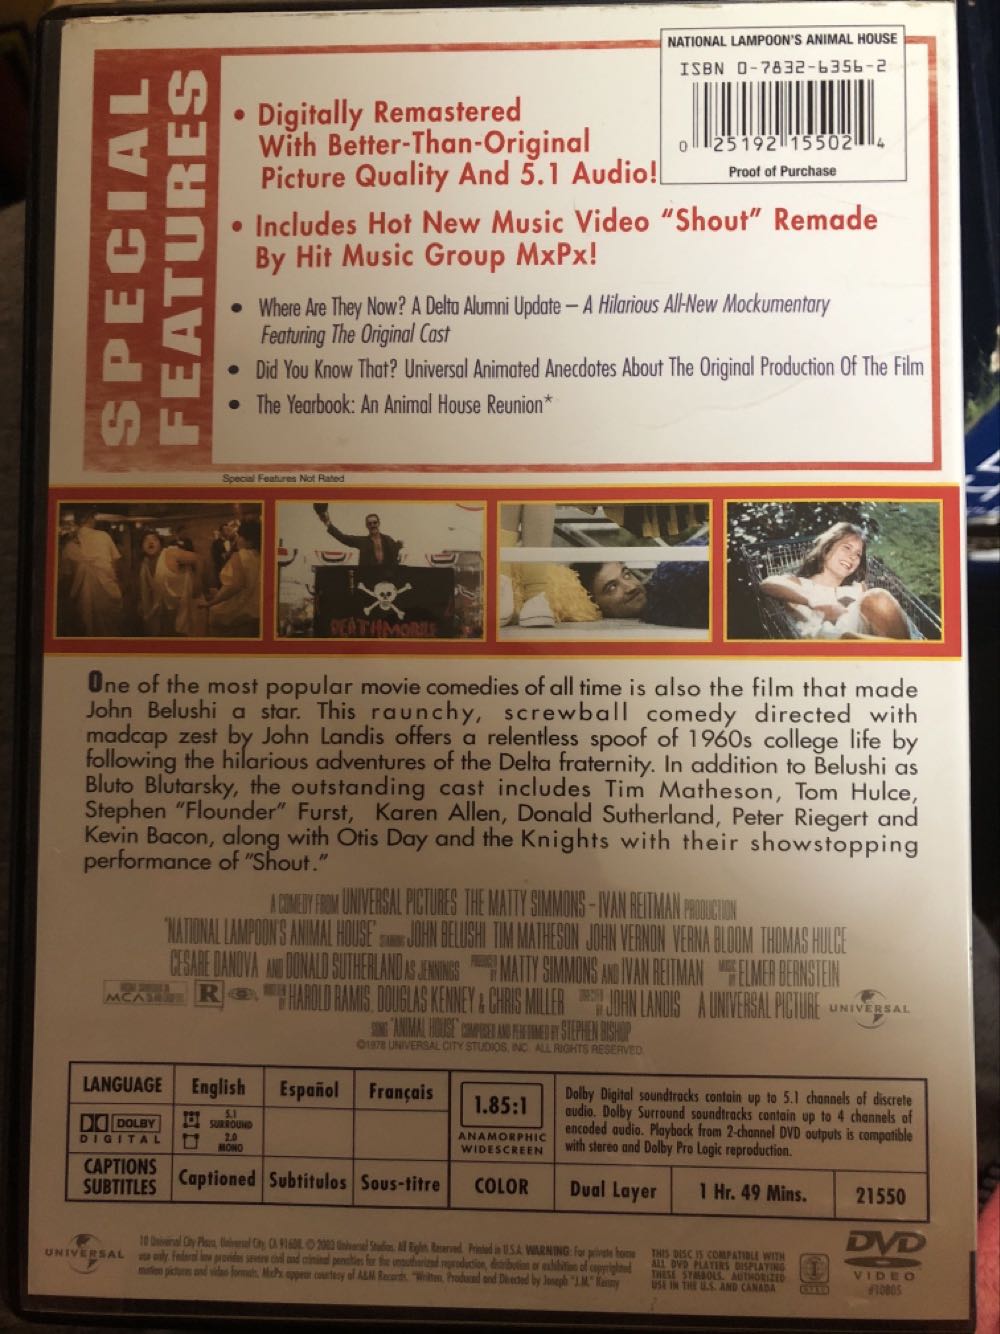 Bad Boys 2 Digital Copy movie collectible [Barcode 043396006195] - Main Image 3